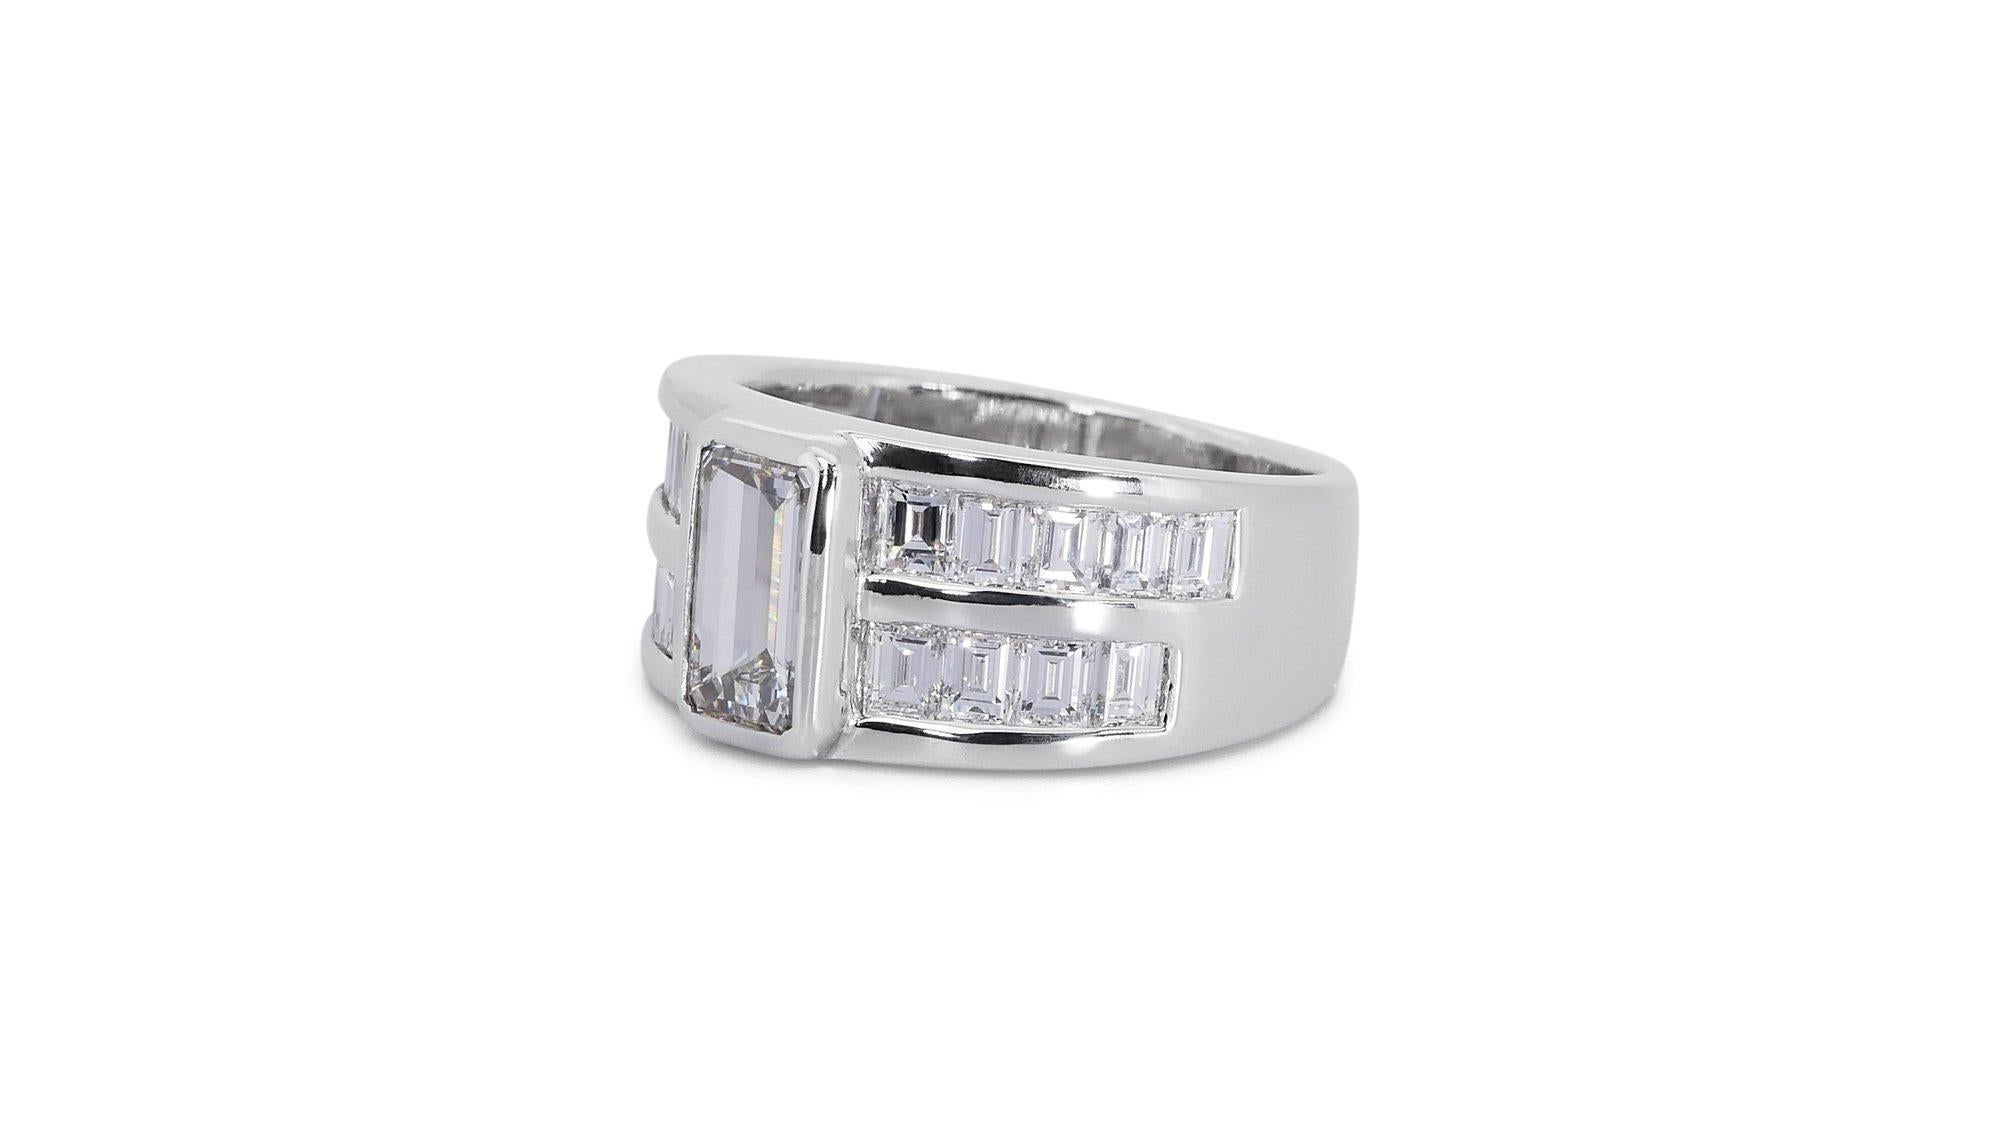 Emerald Cut Glamorous 18K White Gold Dome Ring w/ 1.90 ct Natural Diamonds IGI Certificate For Sale